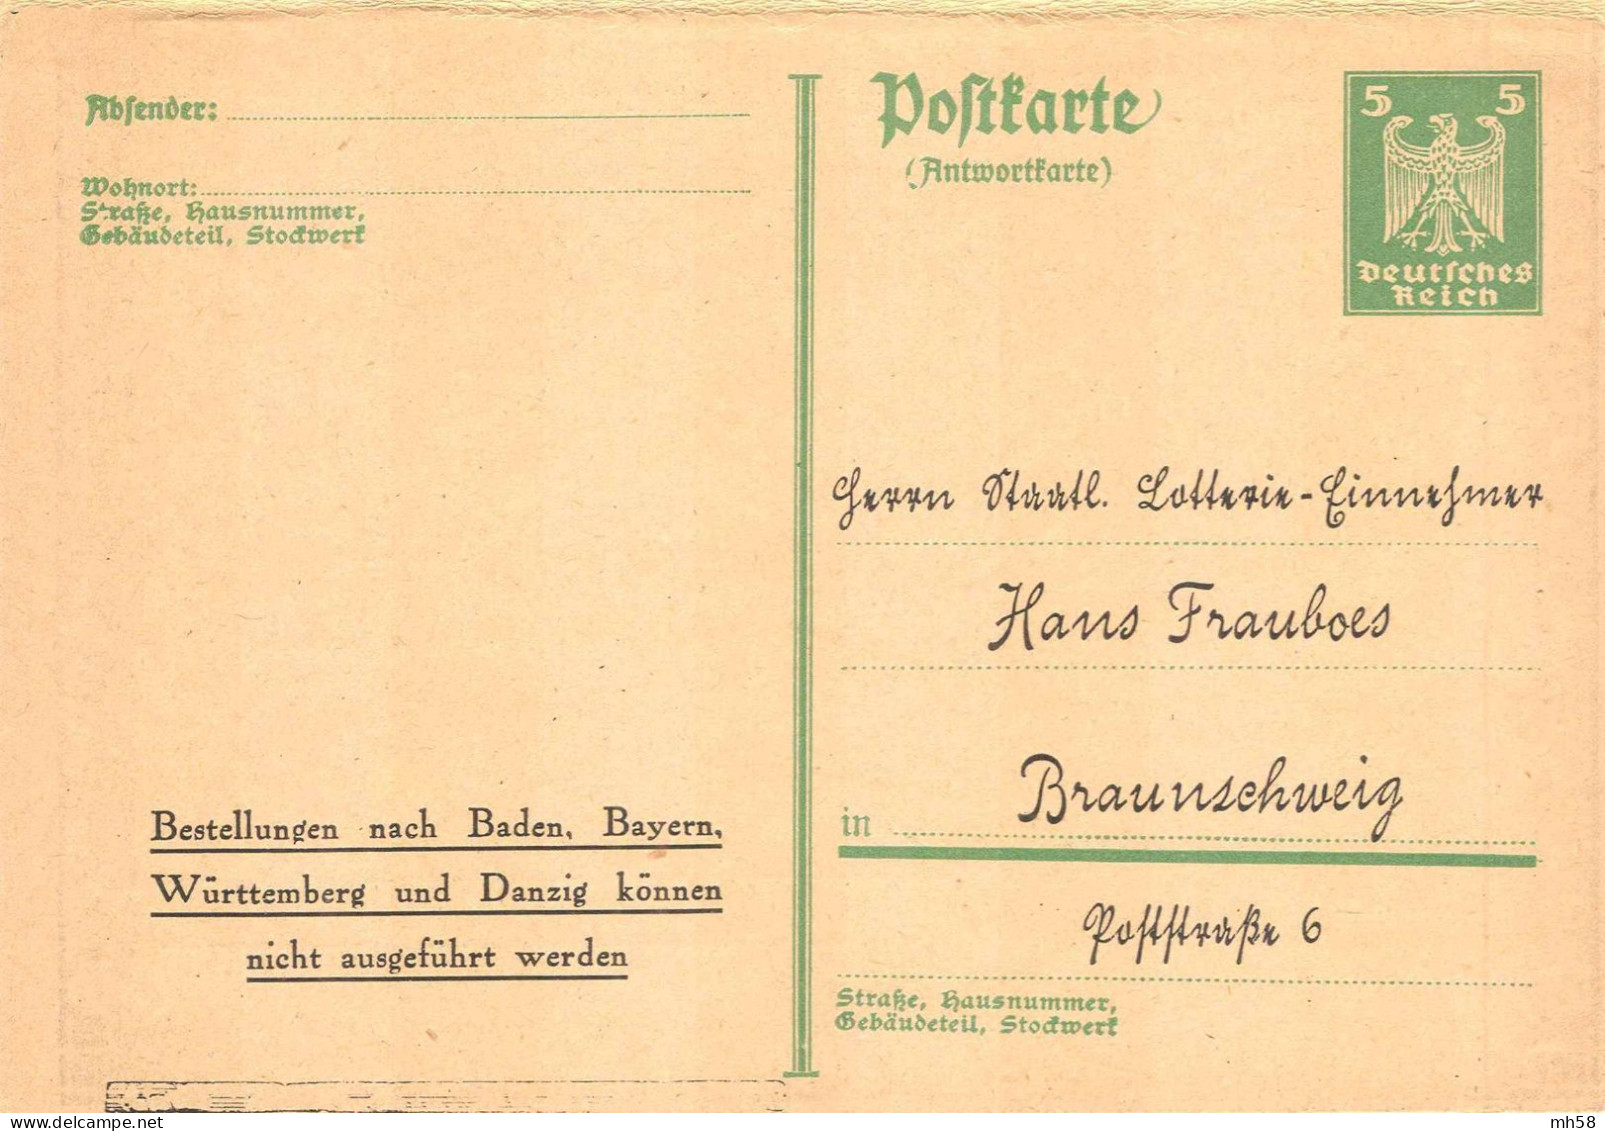 ALLEMAGNE REICH - Entier Privé Réponse Payée / Ganzsache Privat Antwortpostkarte - Lotterie Frauboes Braunschweig - Postcards